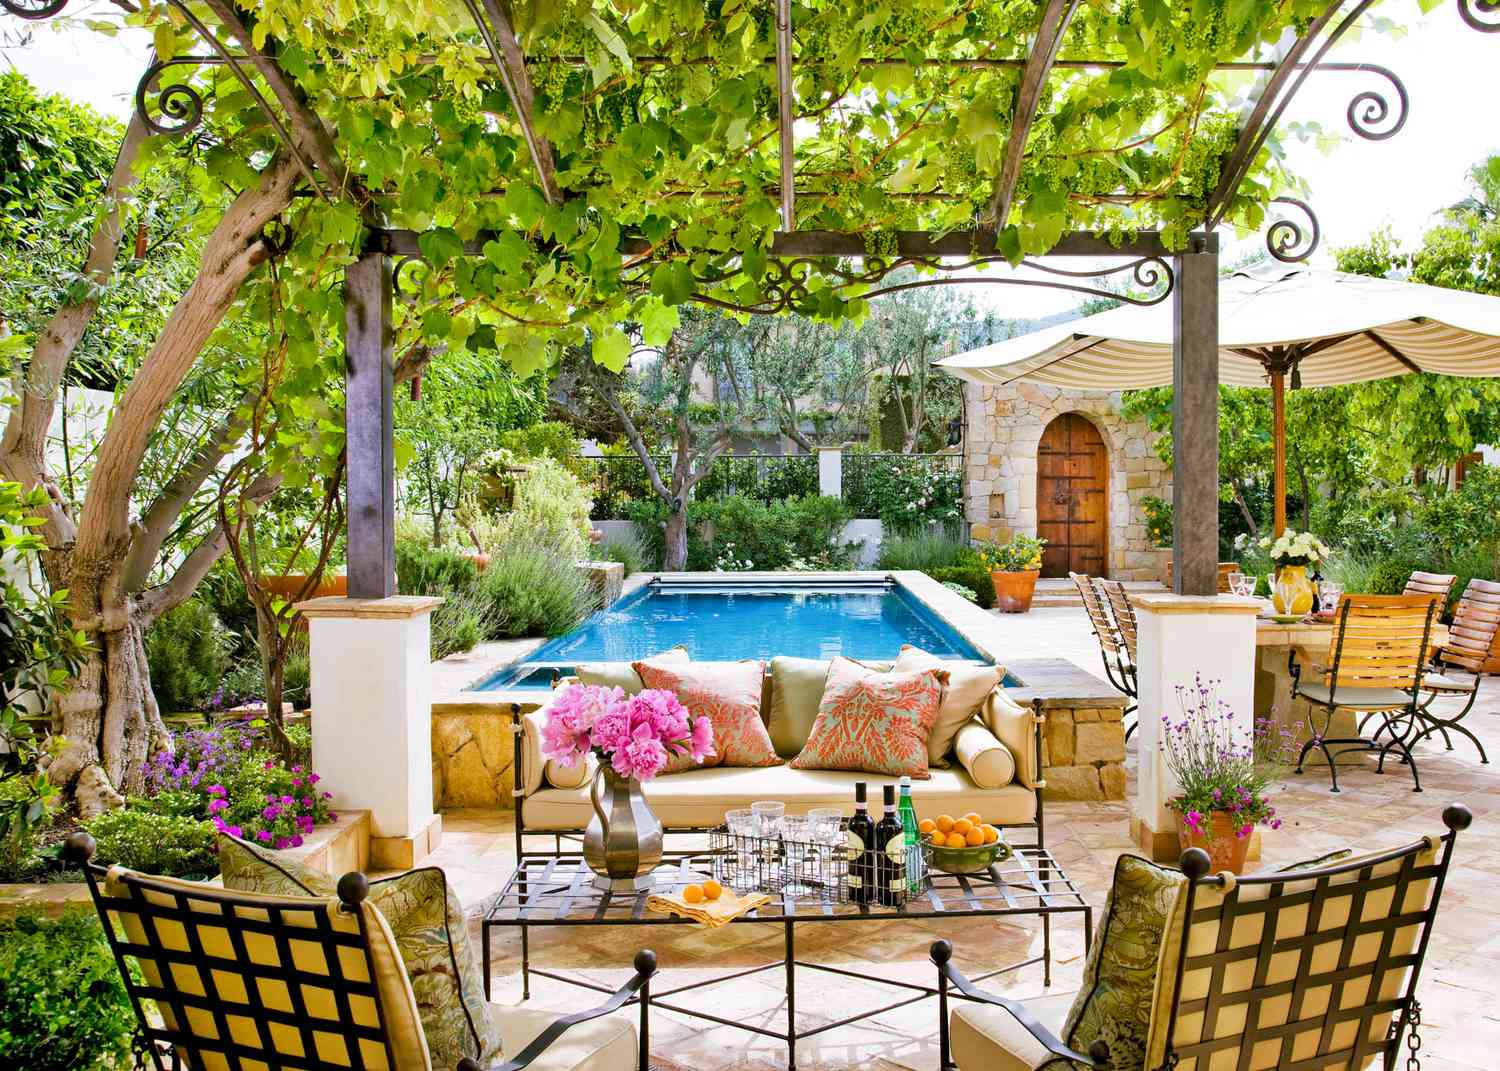 14 Ways to Create an Inviting Backyard Getaway | Better Homes & Gardens